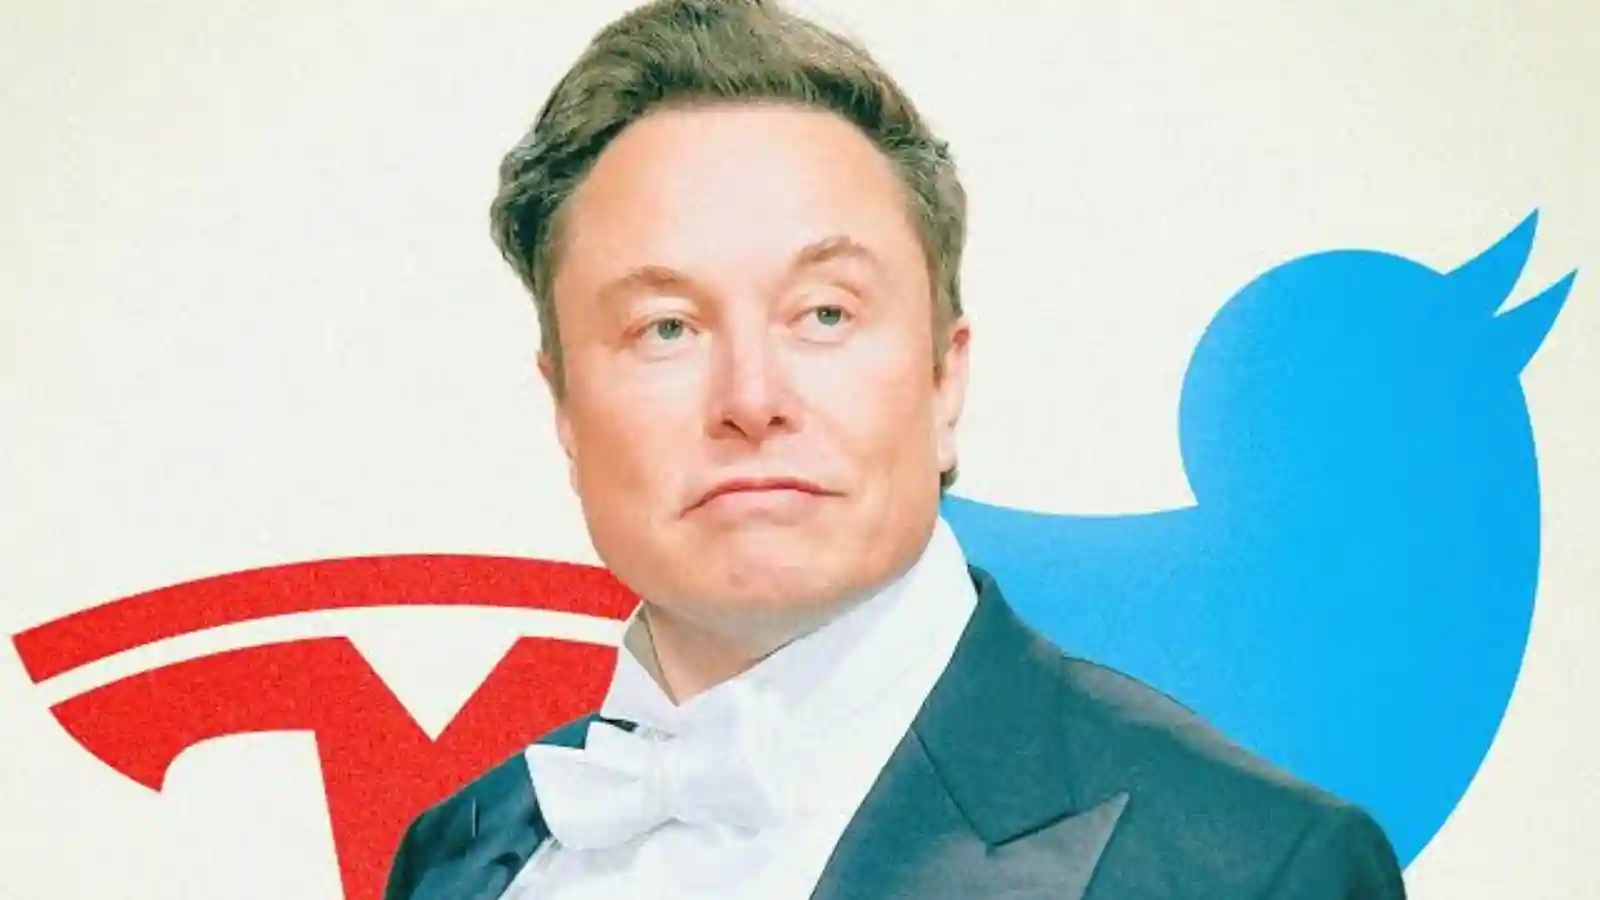 Elon Musk is upsetting Tesla shareholders due to Twitter